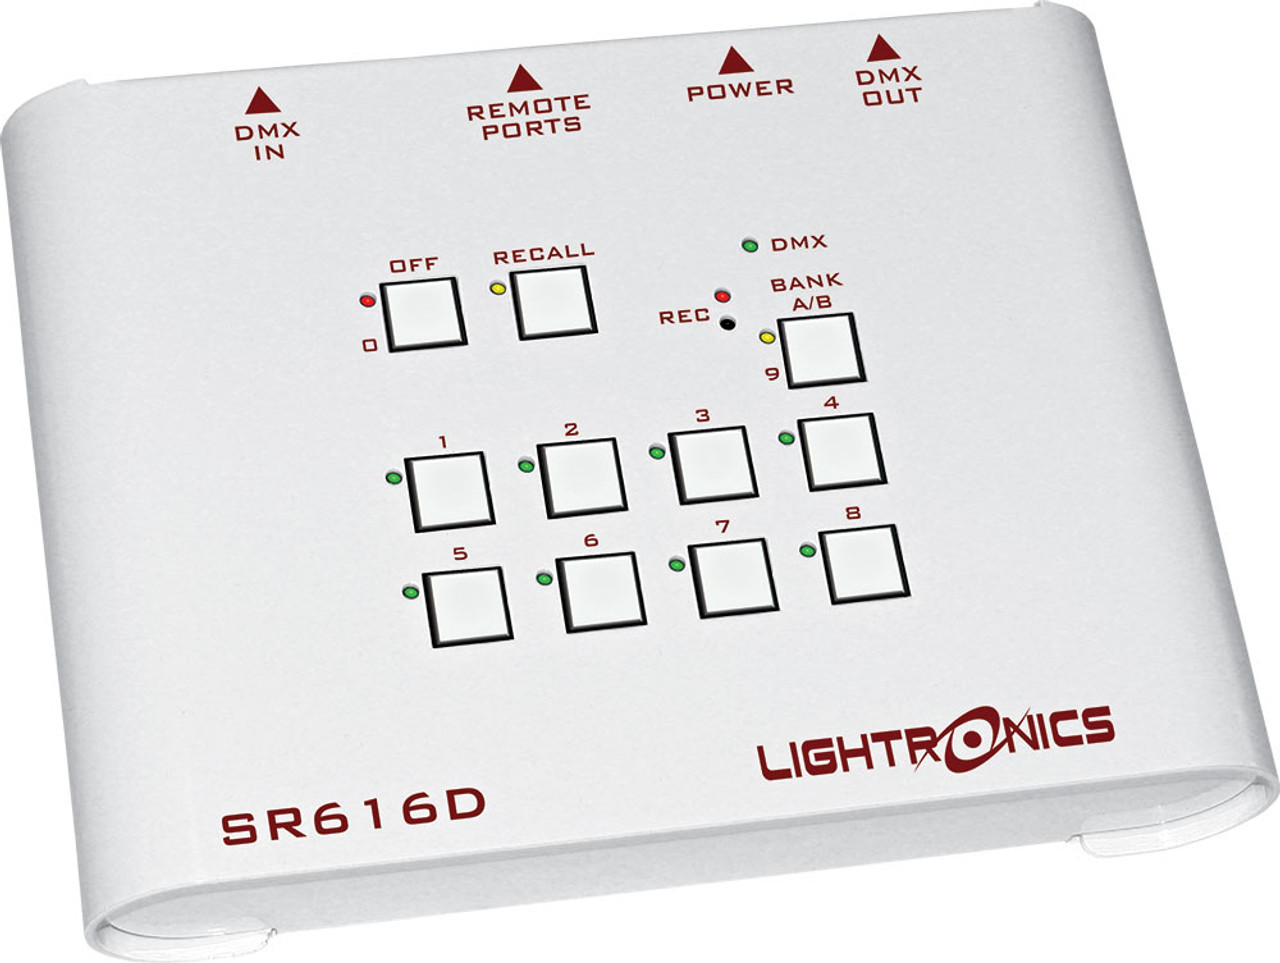 Lightronics SR617W Wallmount Architectural Controller